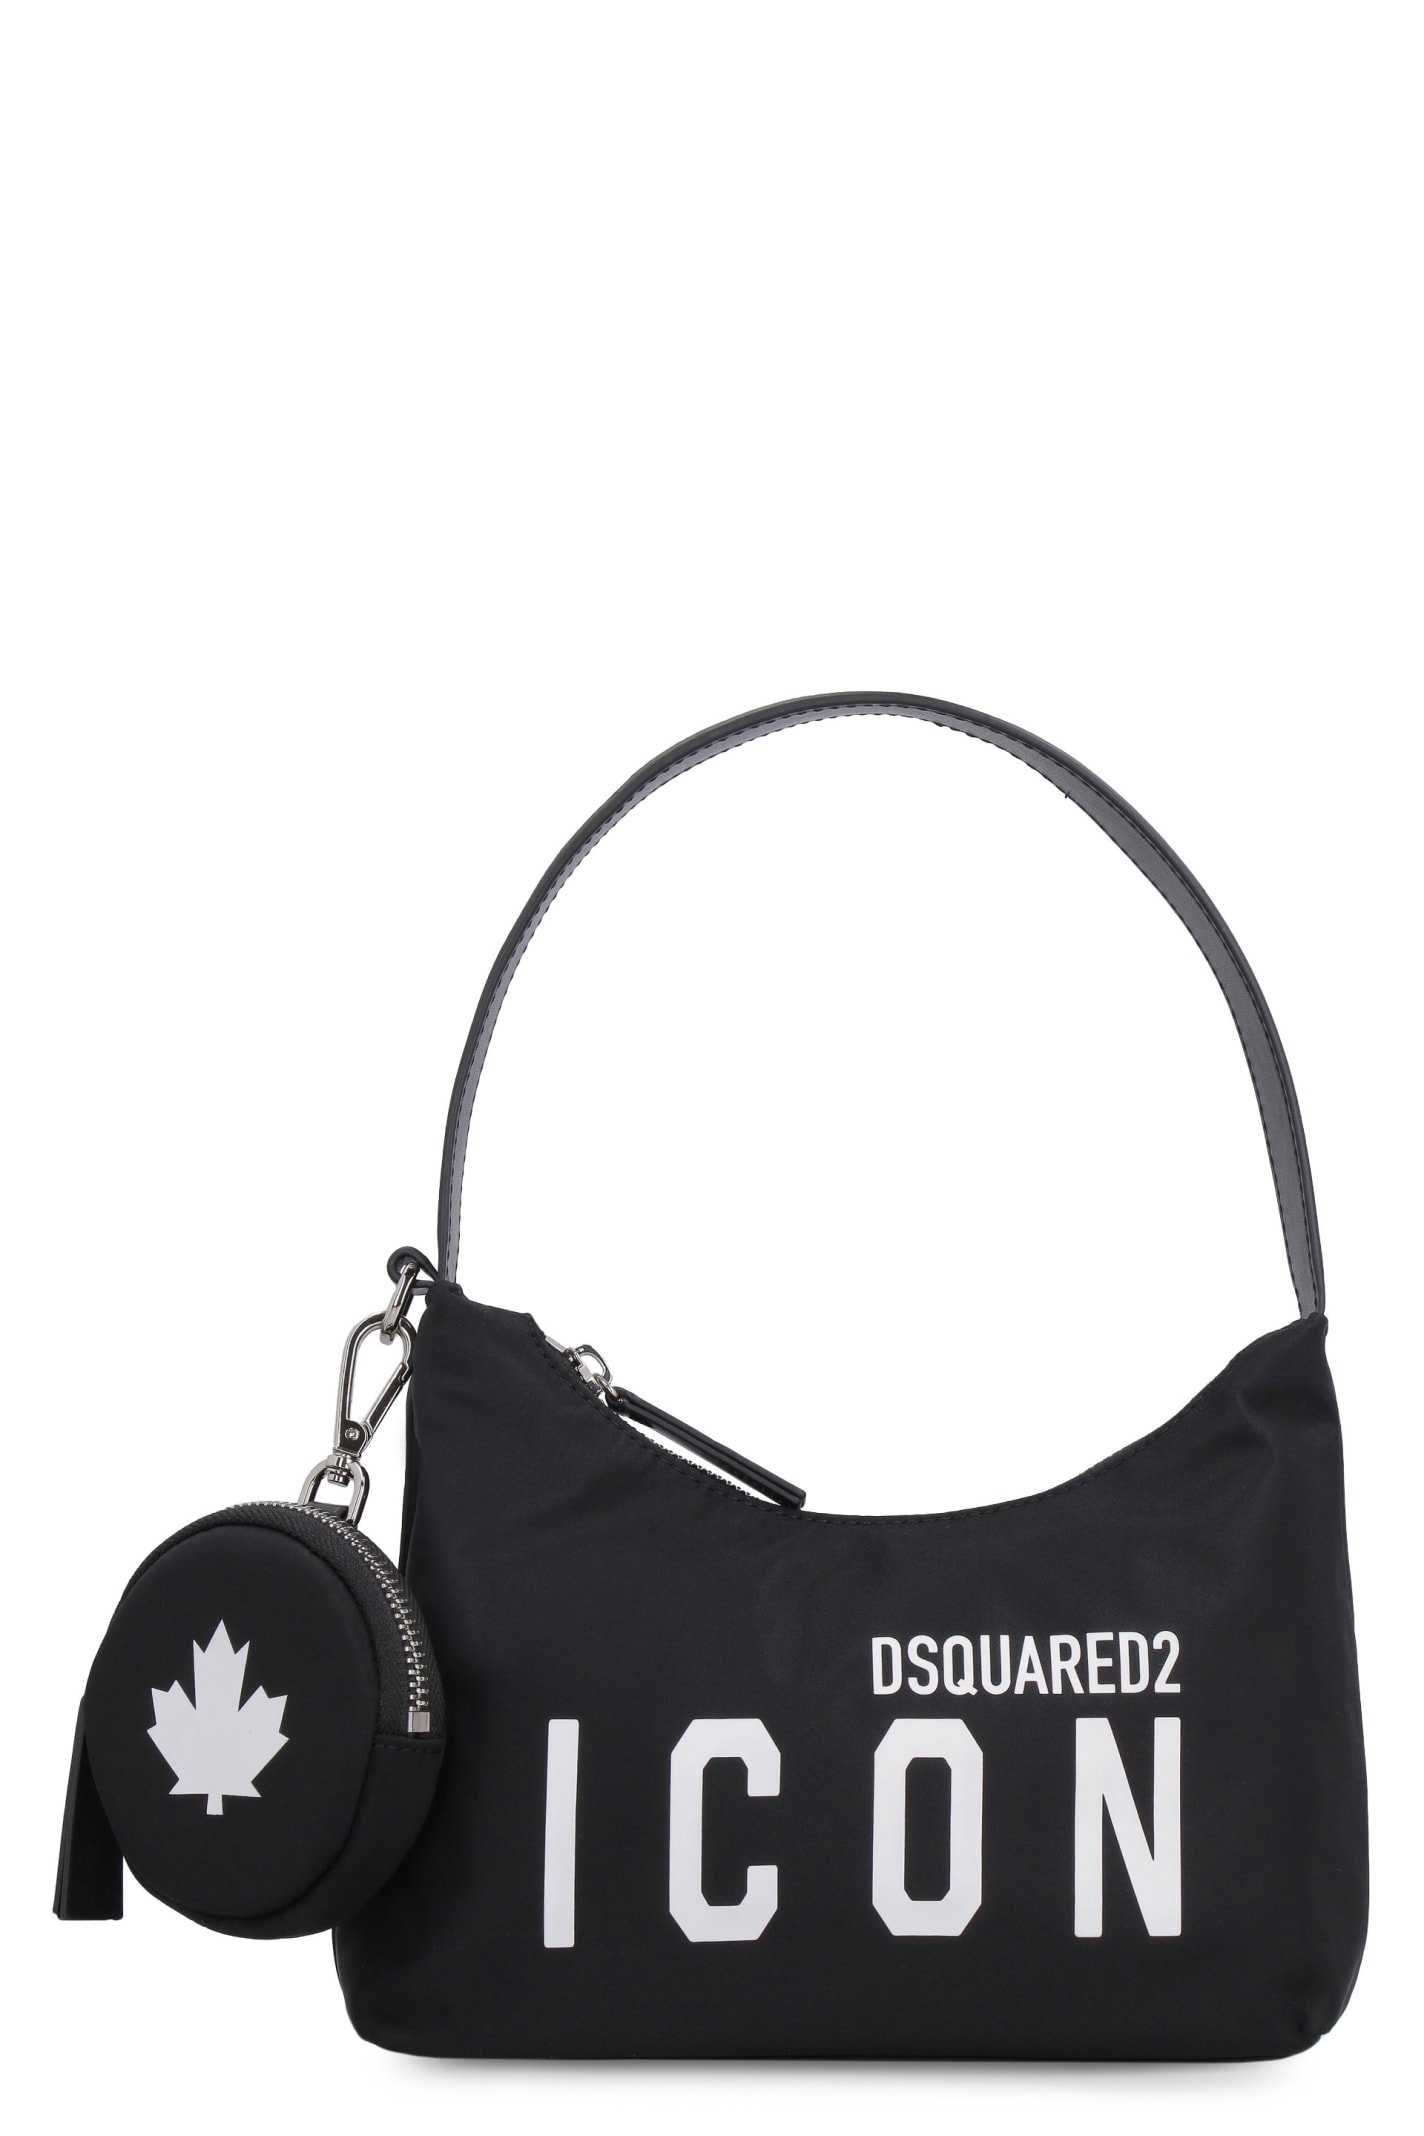 Dsquared2 Icon Nylon Shoulder Bag